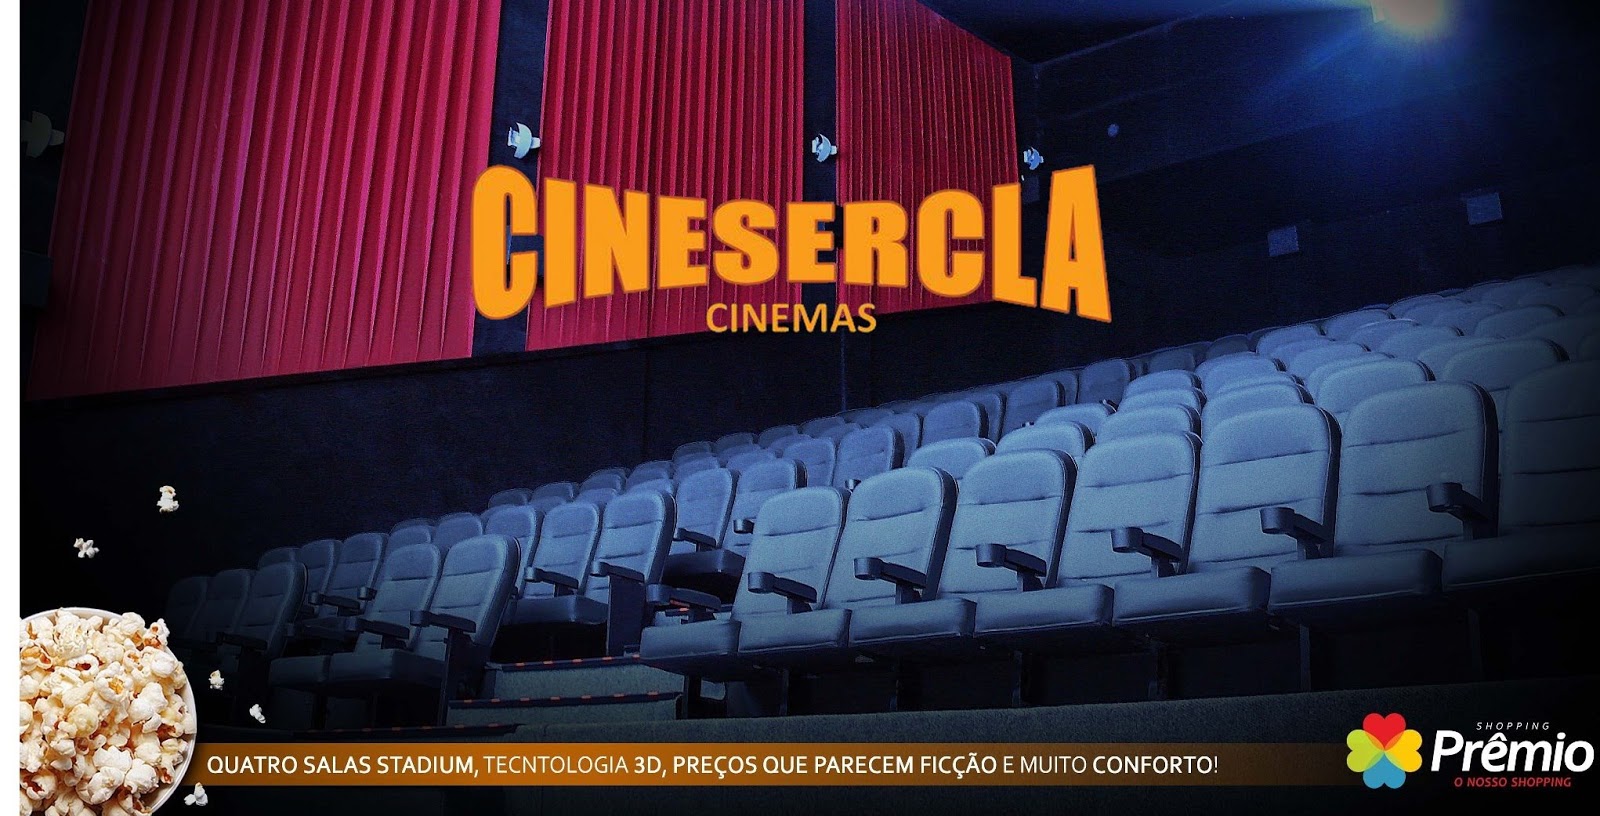 Cinesercla